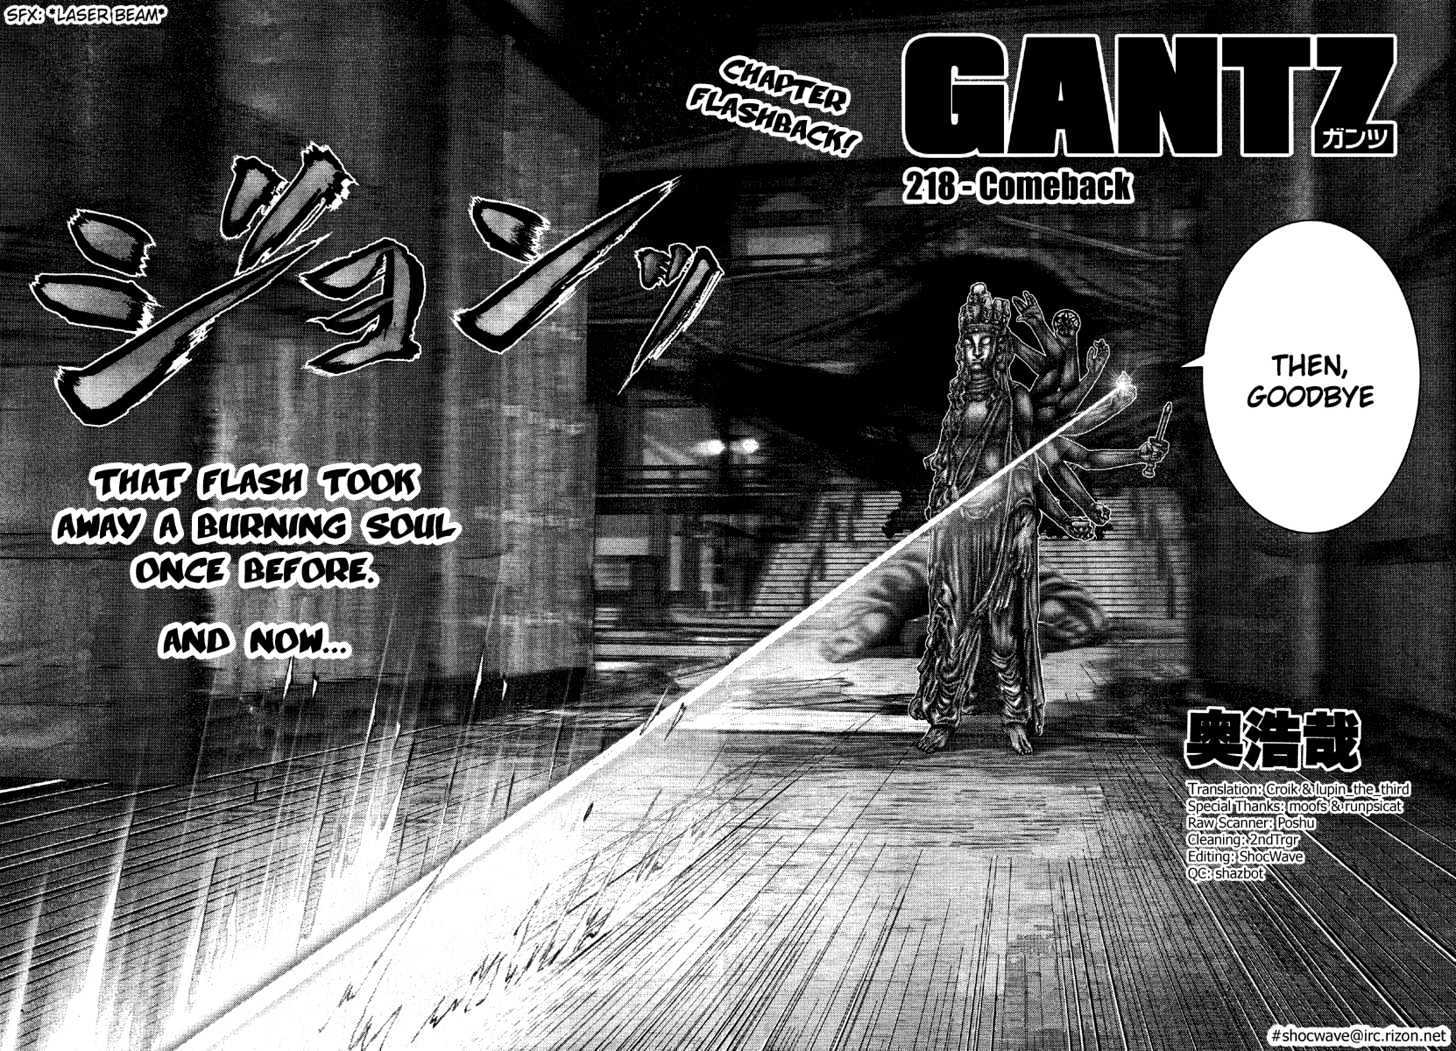 Gantz Vol.19 Chapter 218 : Comeback - Picture 3